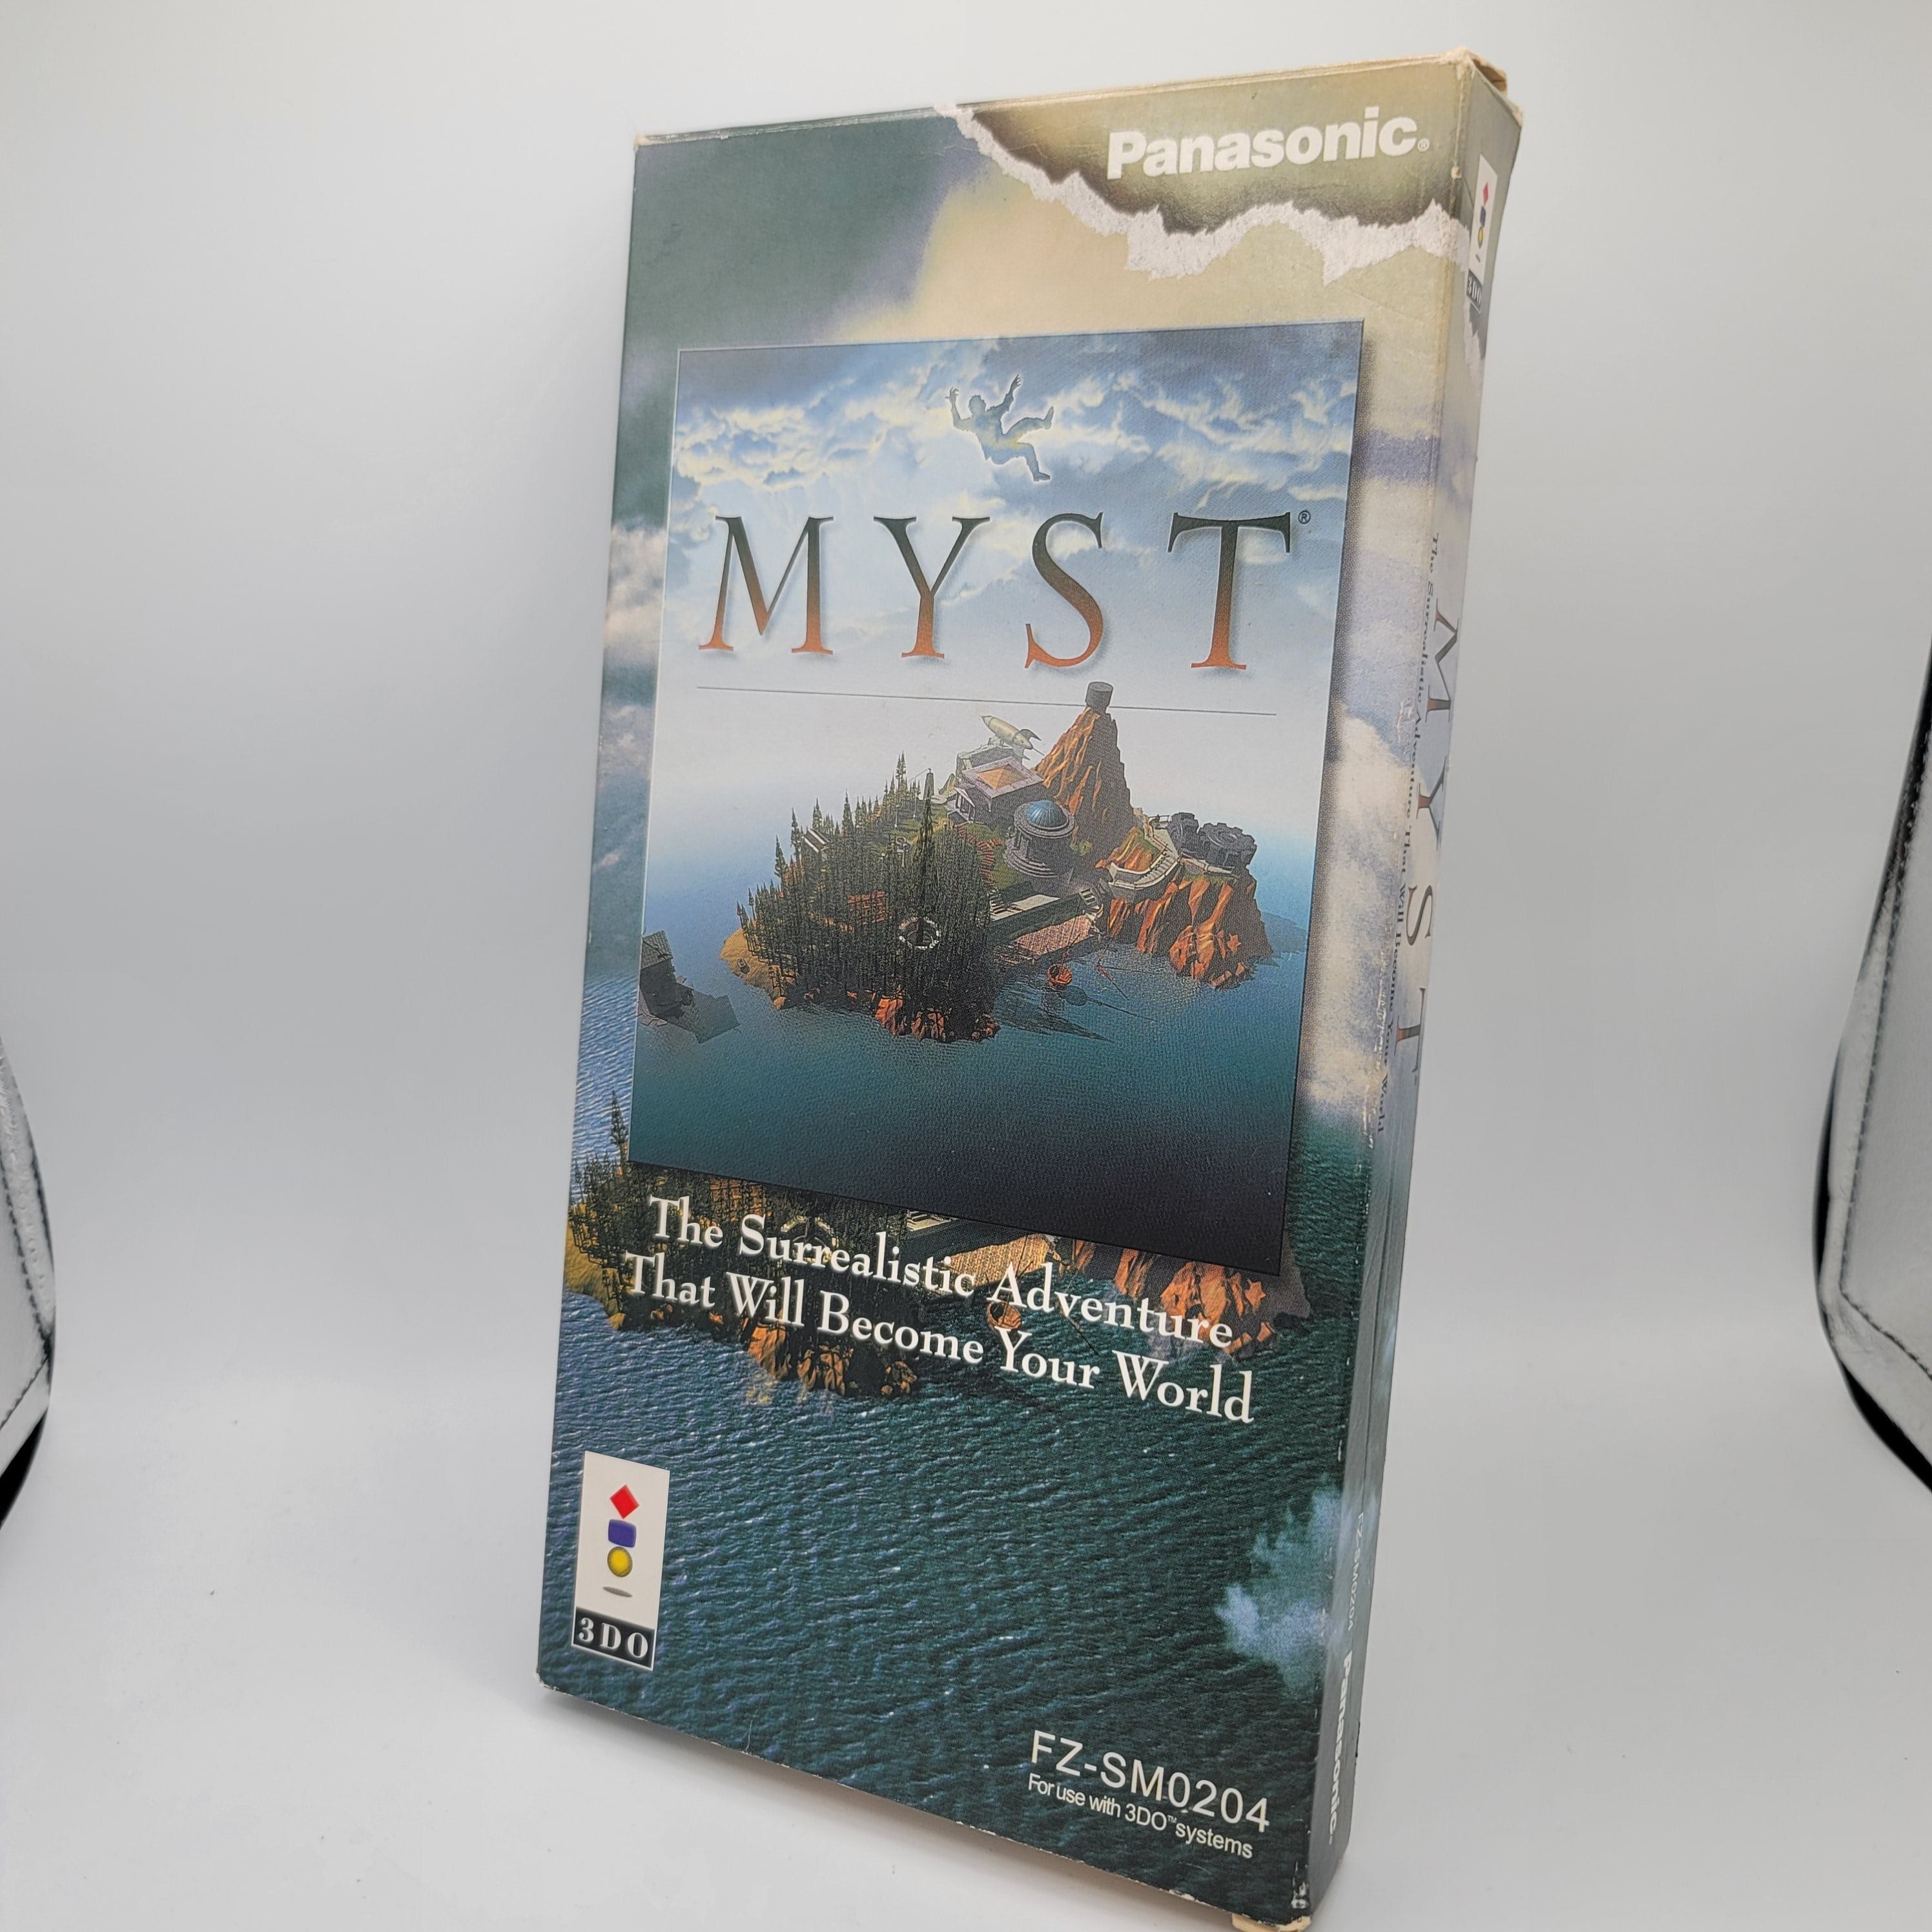 3DO - Myst (Long Box)